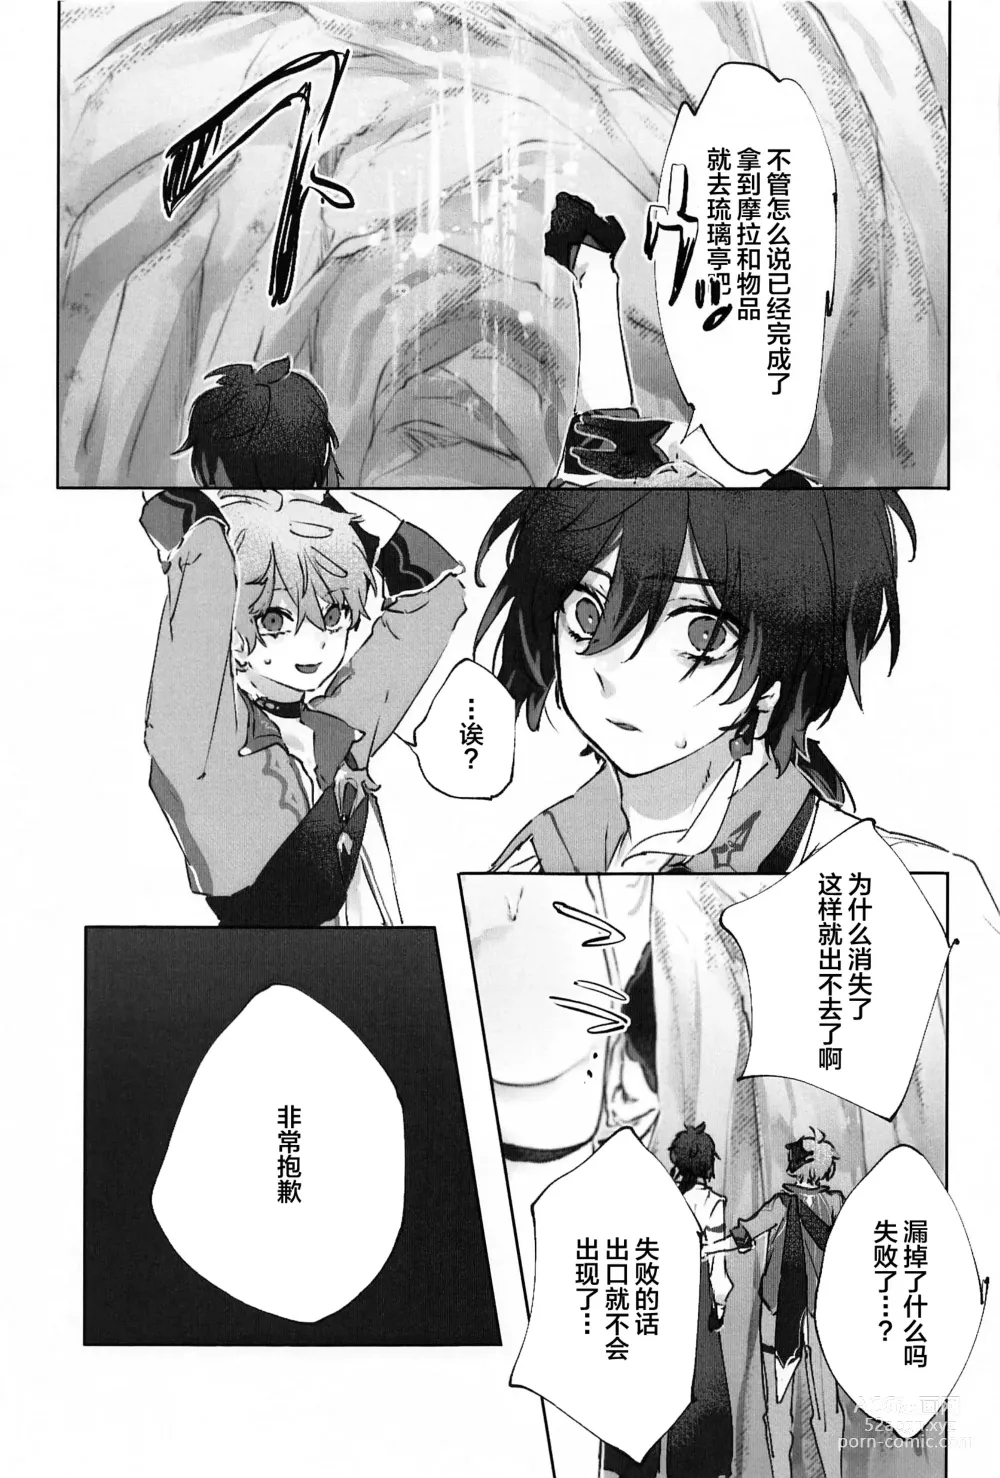 Page 45 of doujinshi Okawari.